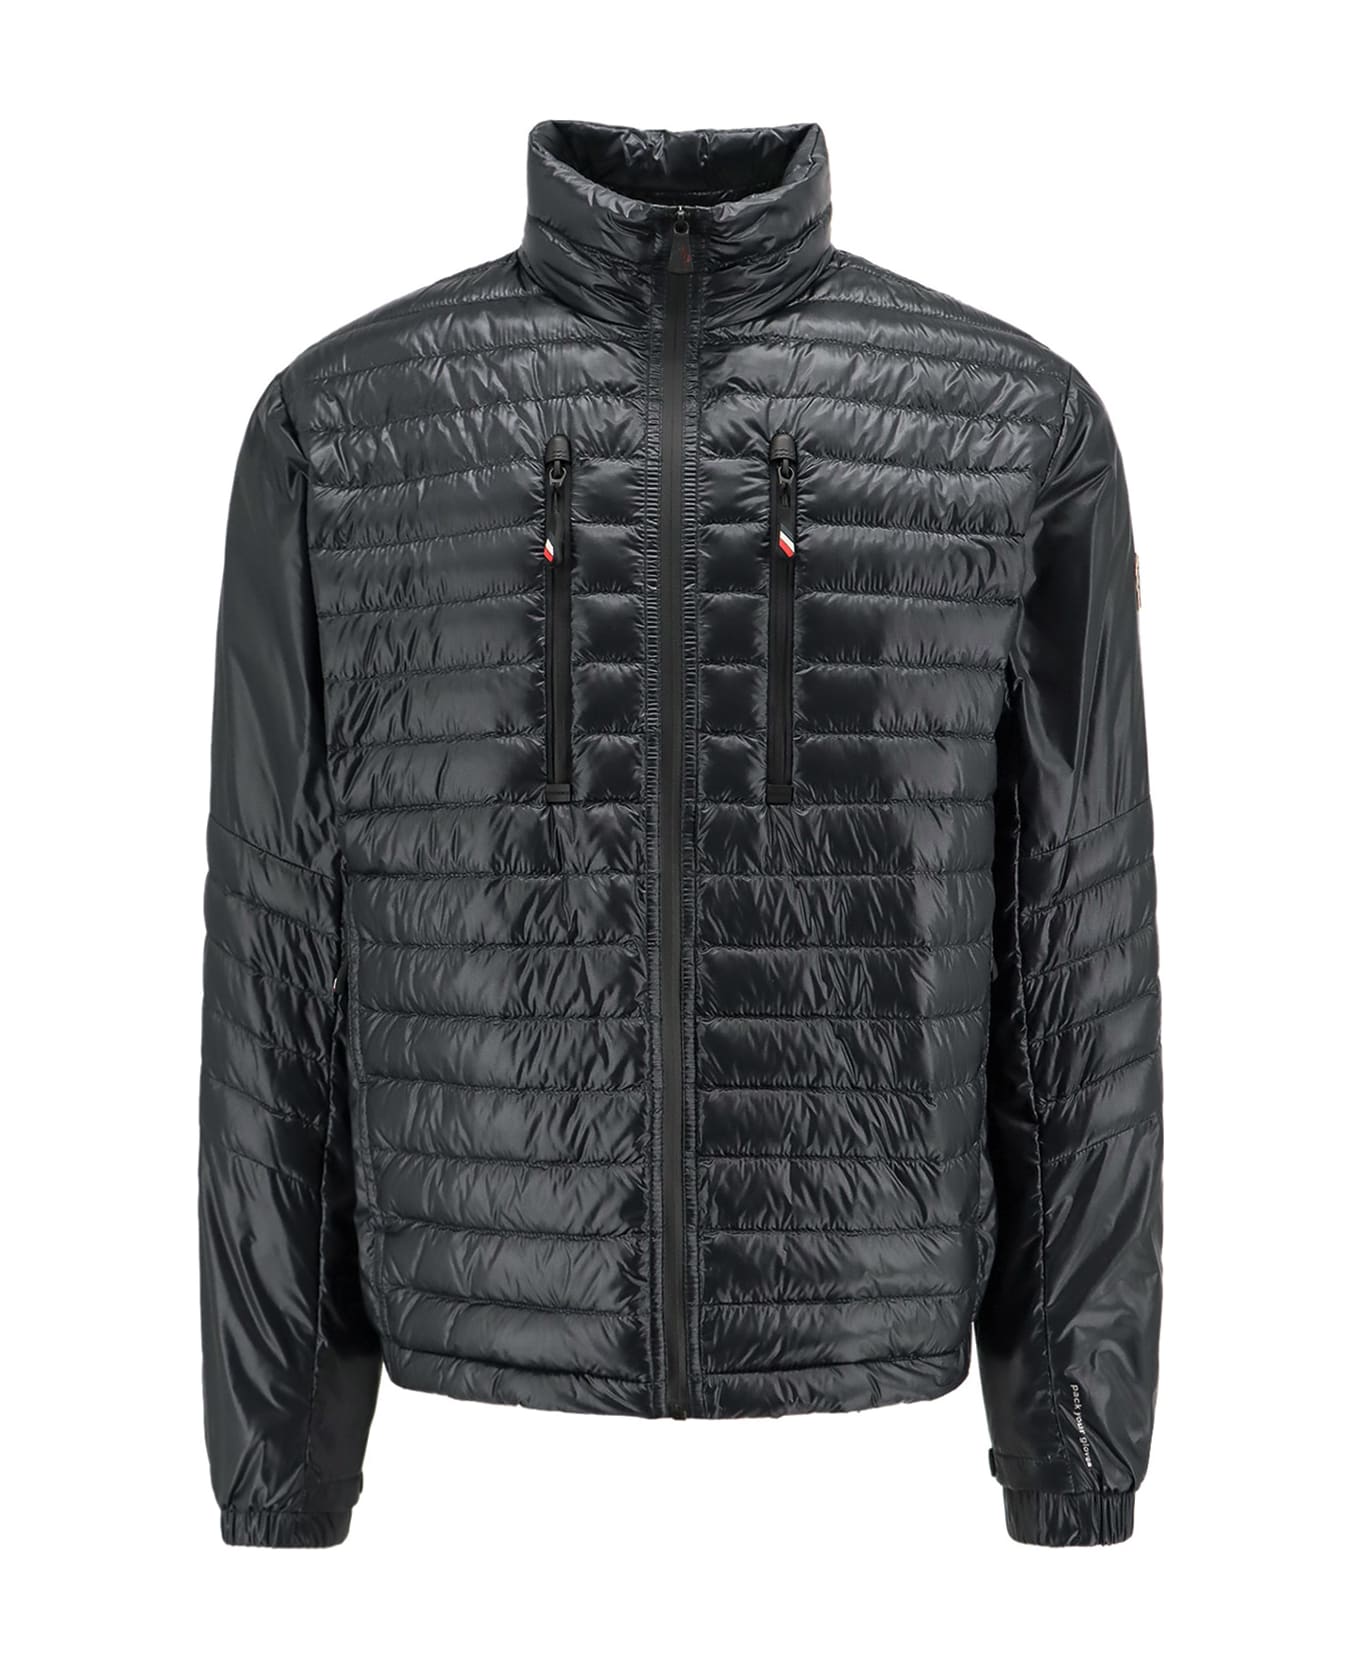 Moncler Grenoble Althaus Jacket - Black